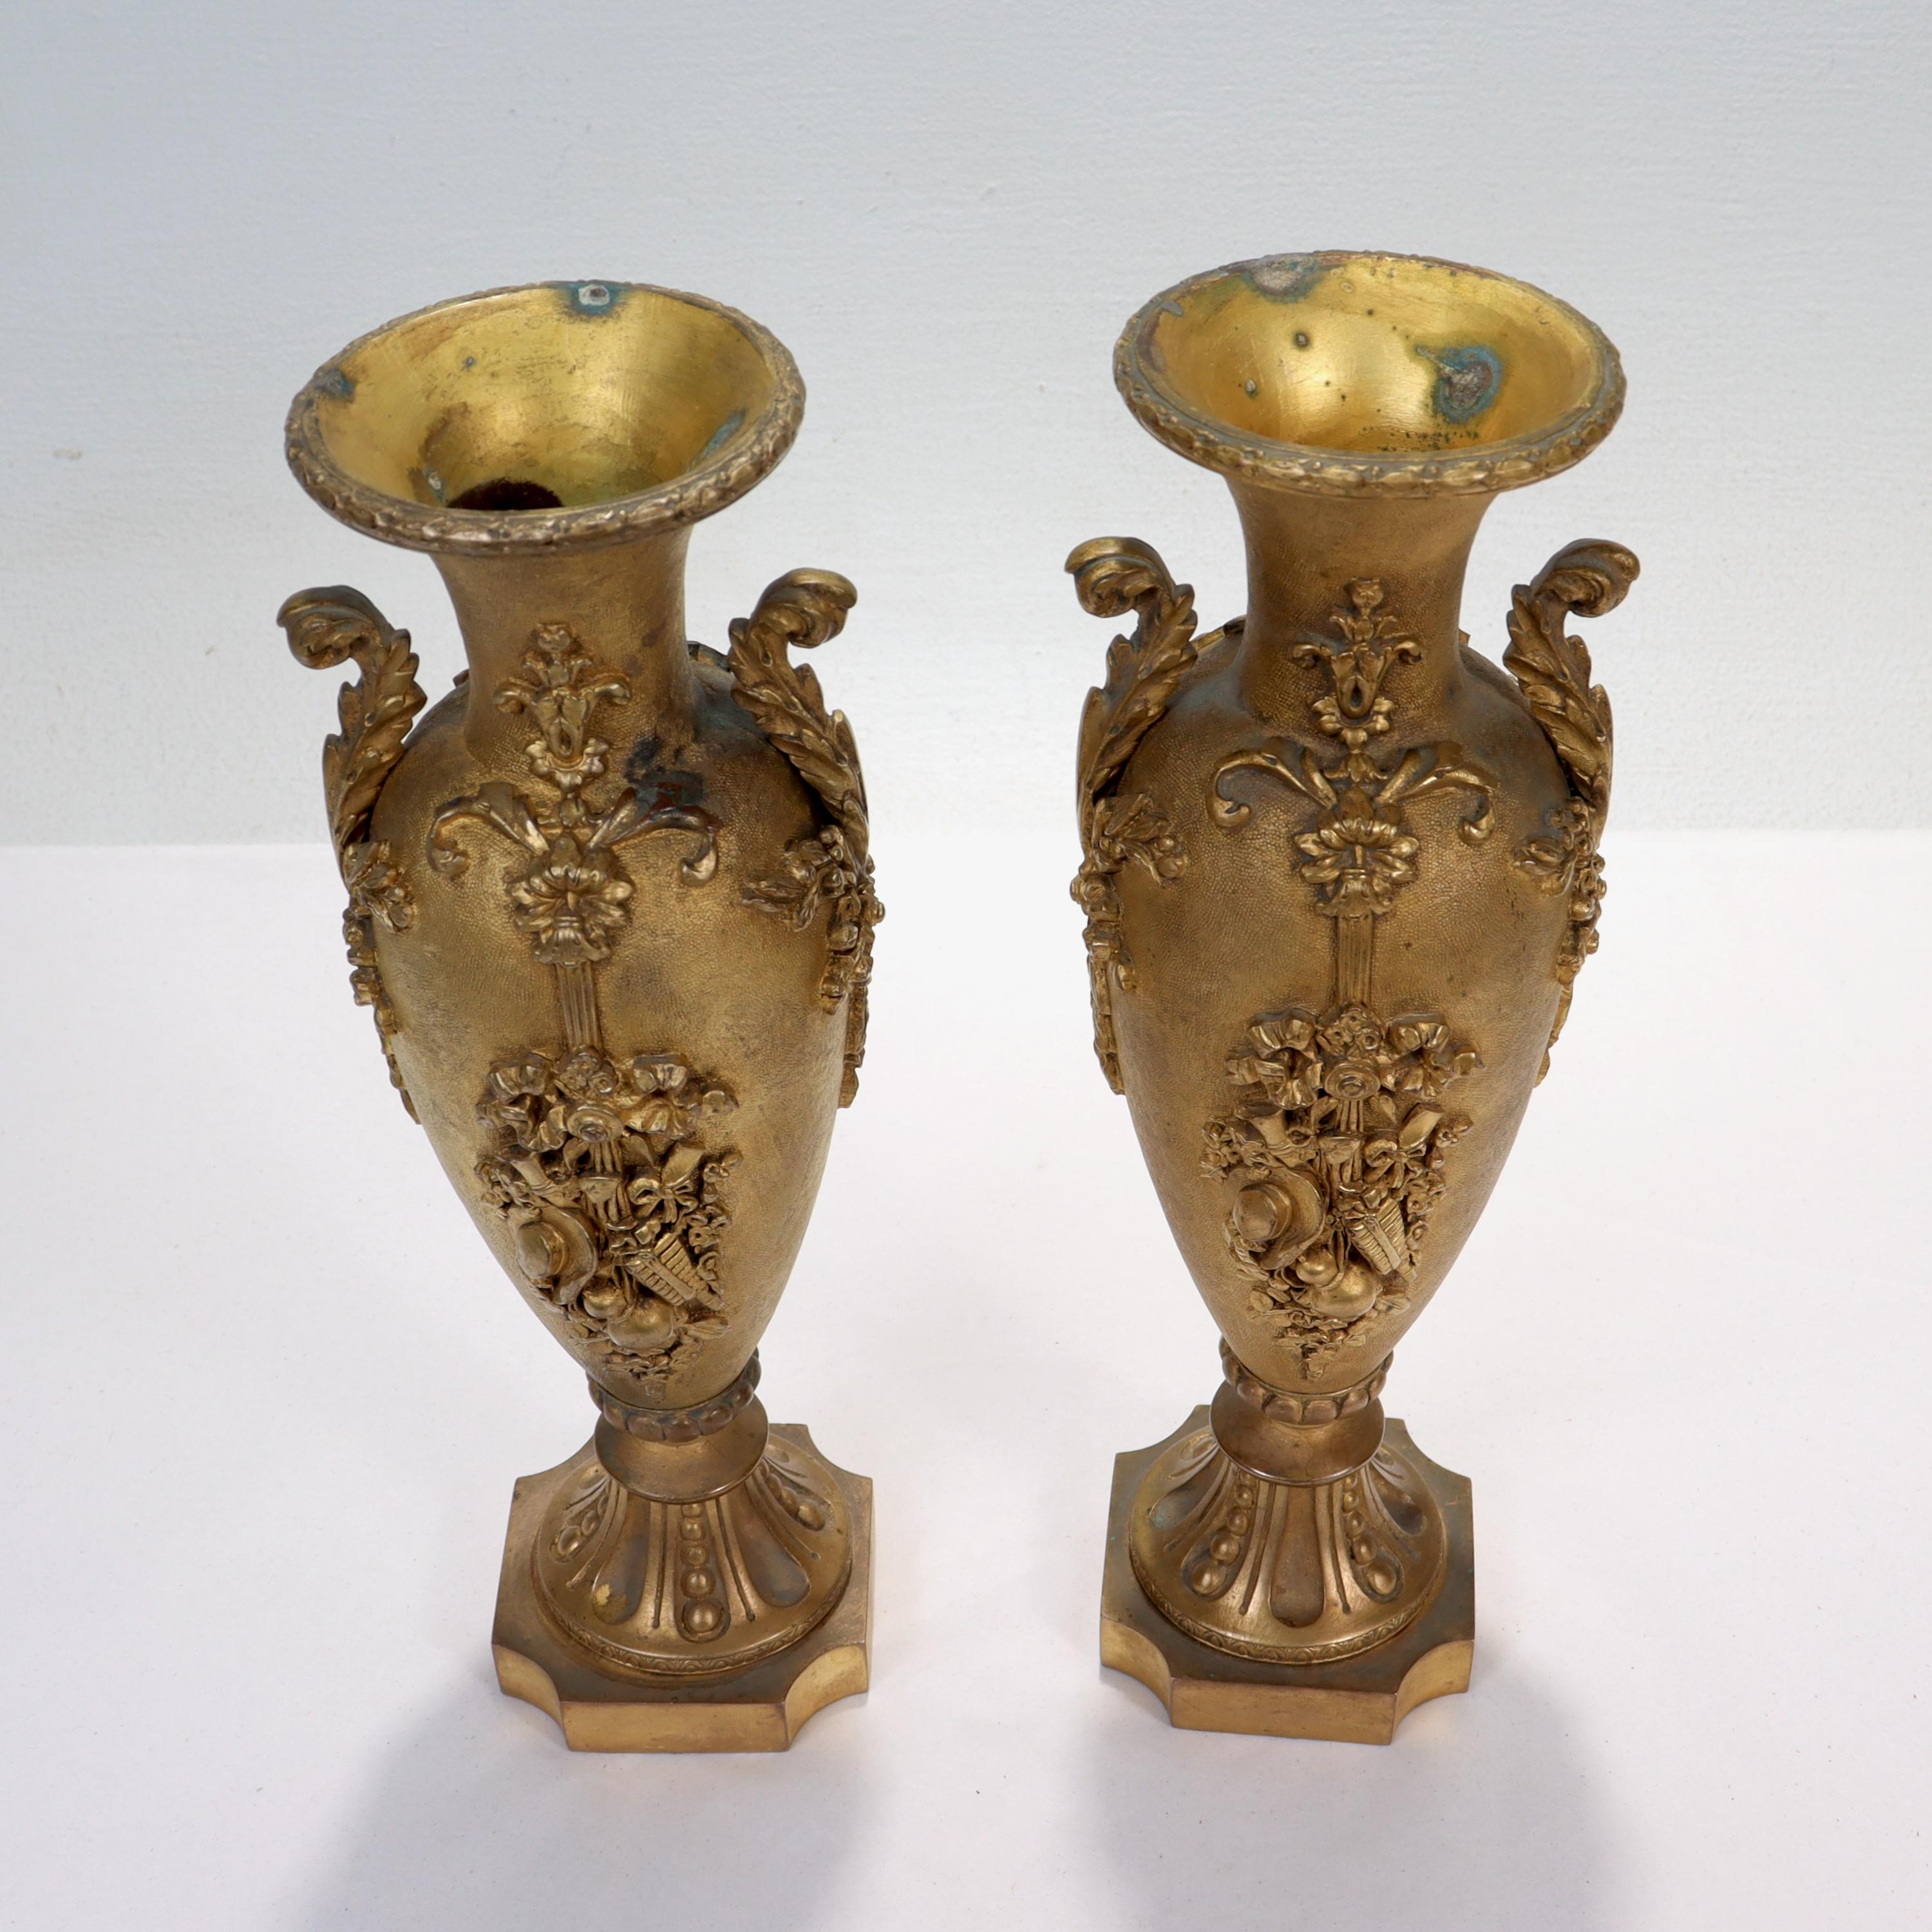 Antique Second Empire French Doré Gilt Bronze Vases or Urns For Sale 7